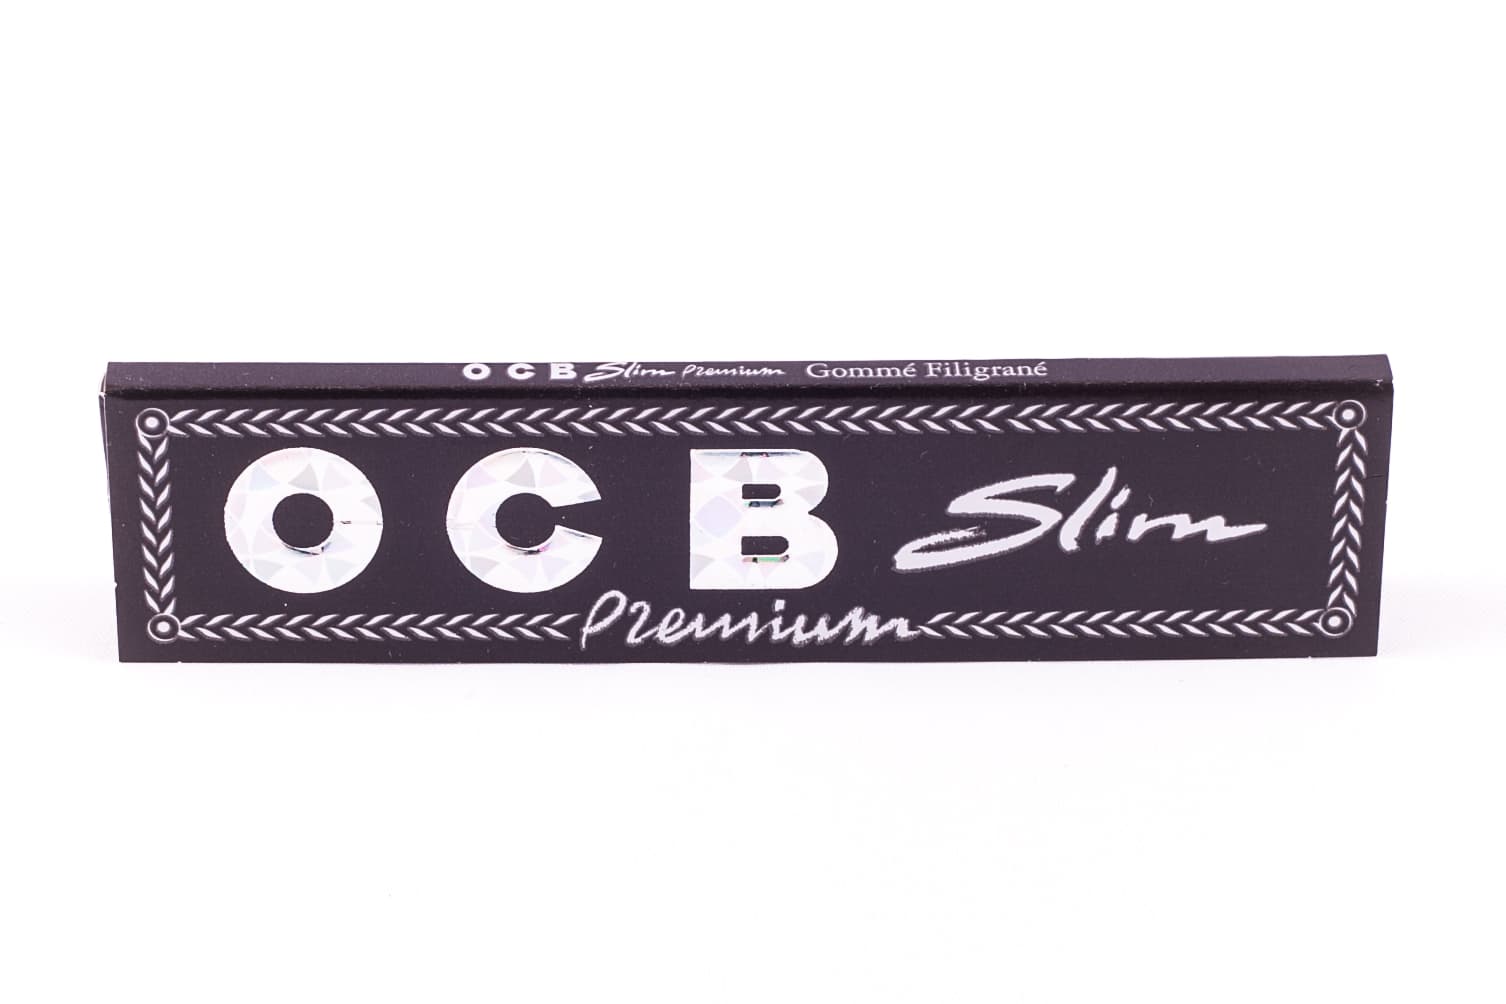 OCB Premium Slim Kingsize Papers | Tobacco Specialists